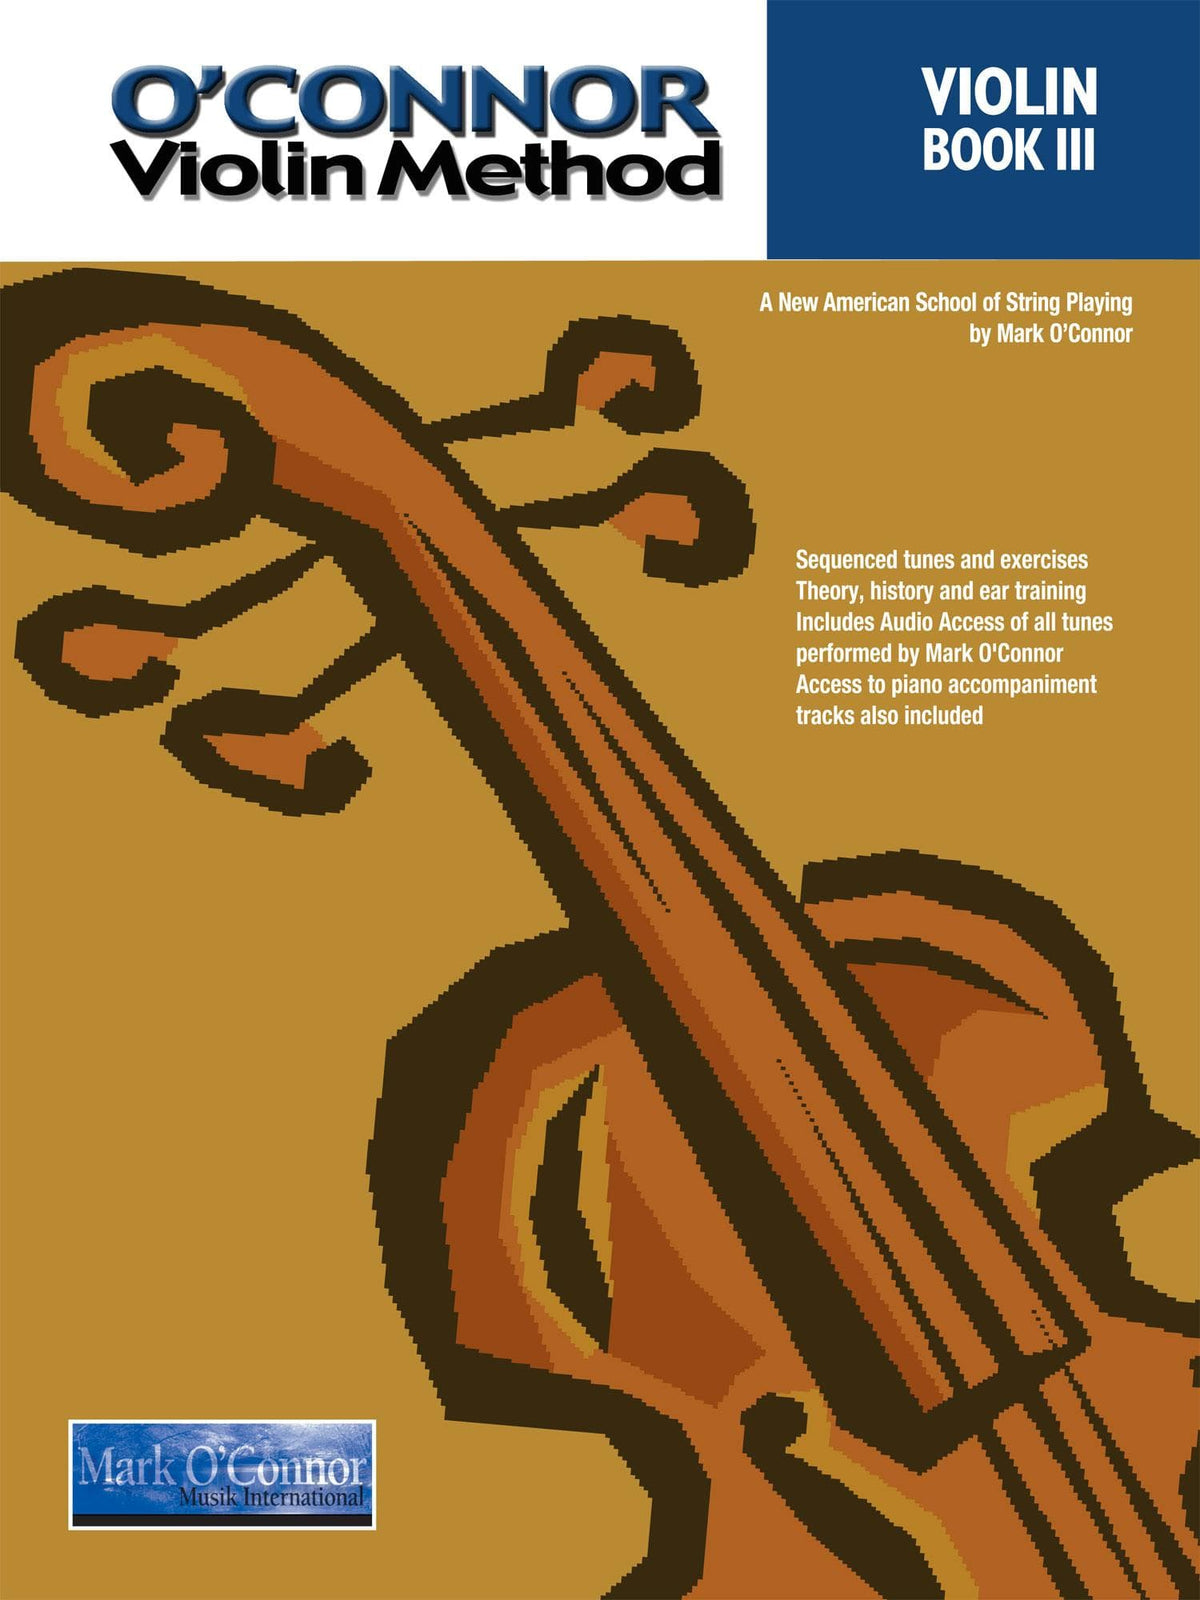 O'Connor Violin Method Book III